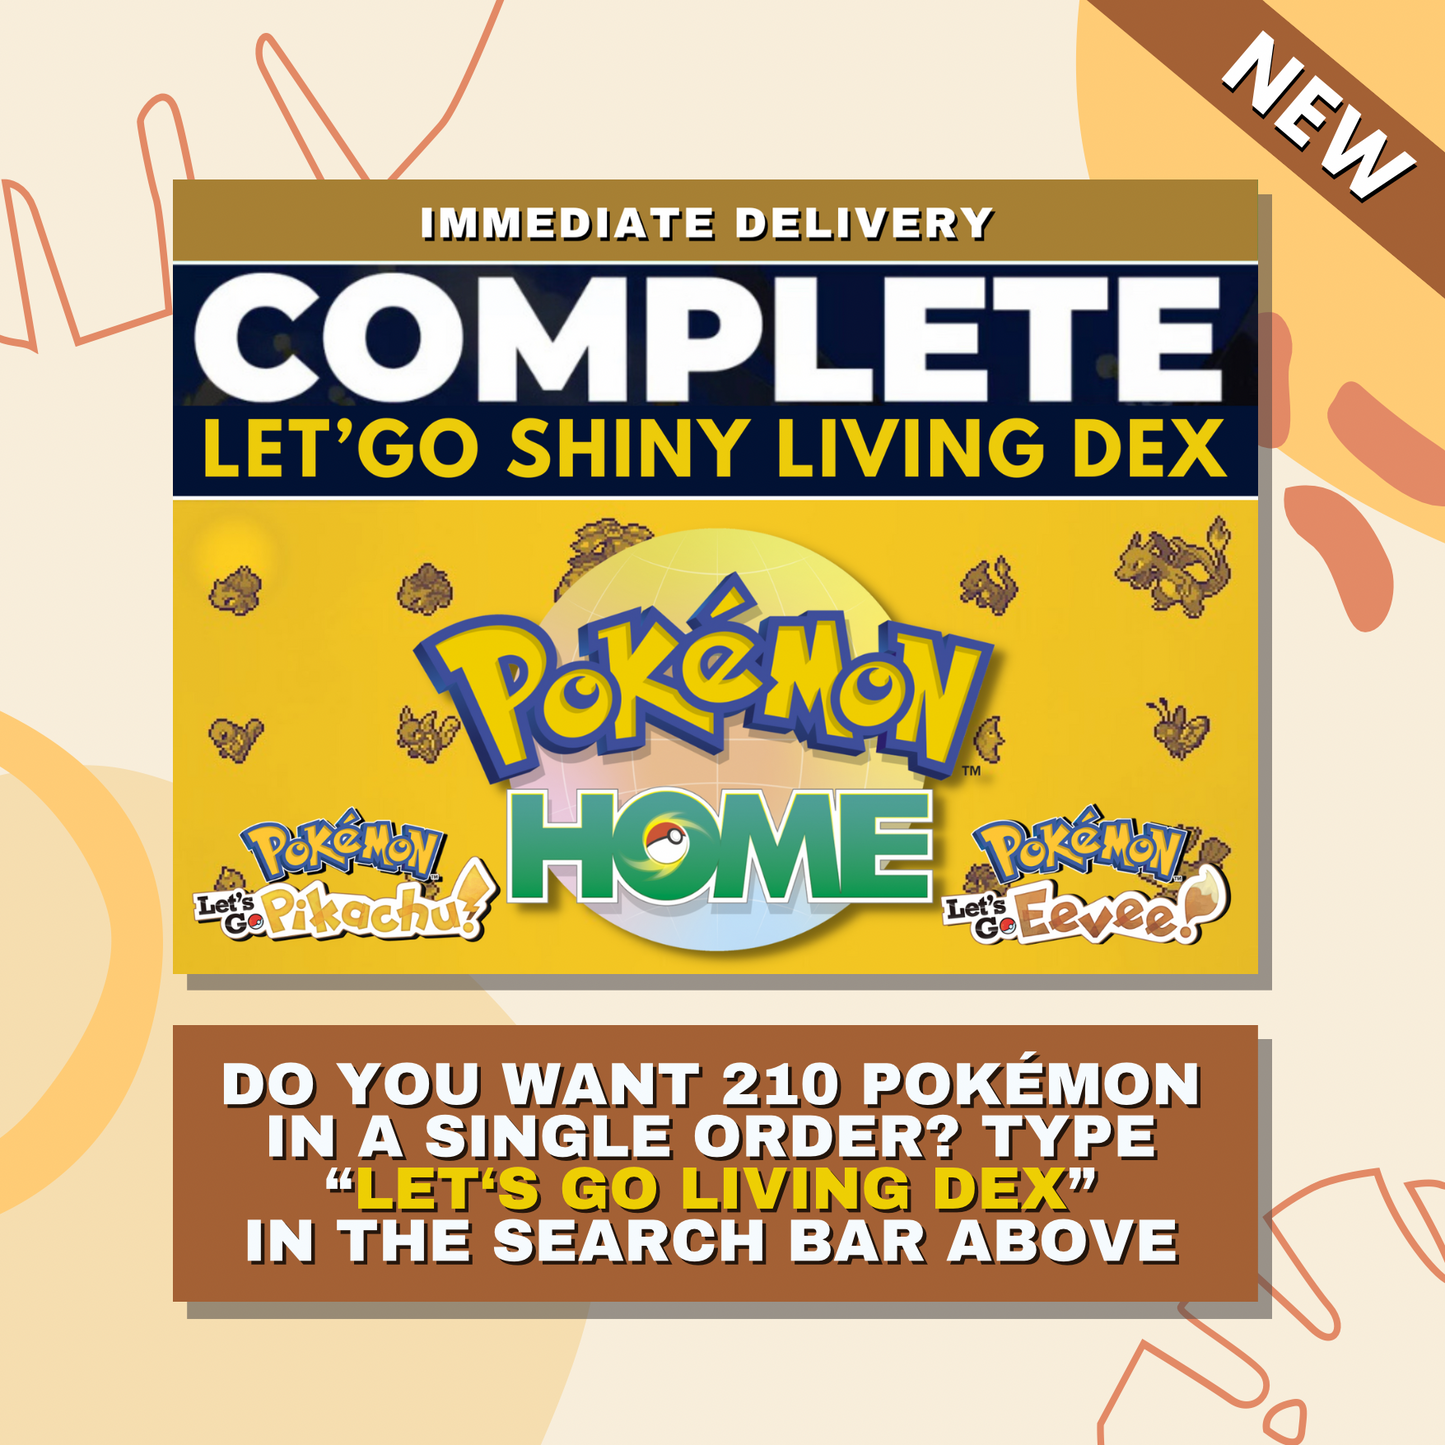 Sandslash Kanto Shiny ✨ or Non Shiny Pokémon Let's Go Pikachu Eevee Level 100 Competitive Battle Ready 6 IV 100% Legit Legal Customizable Custom OT by Shiny Living Dex | Shiny Living Dex